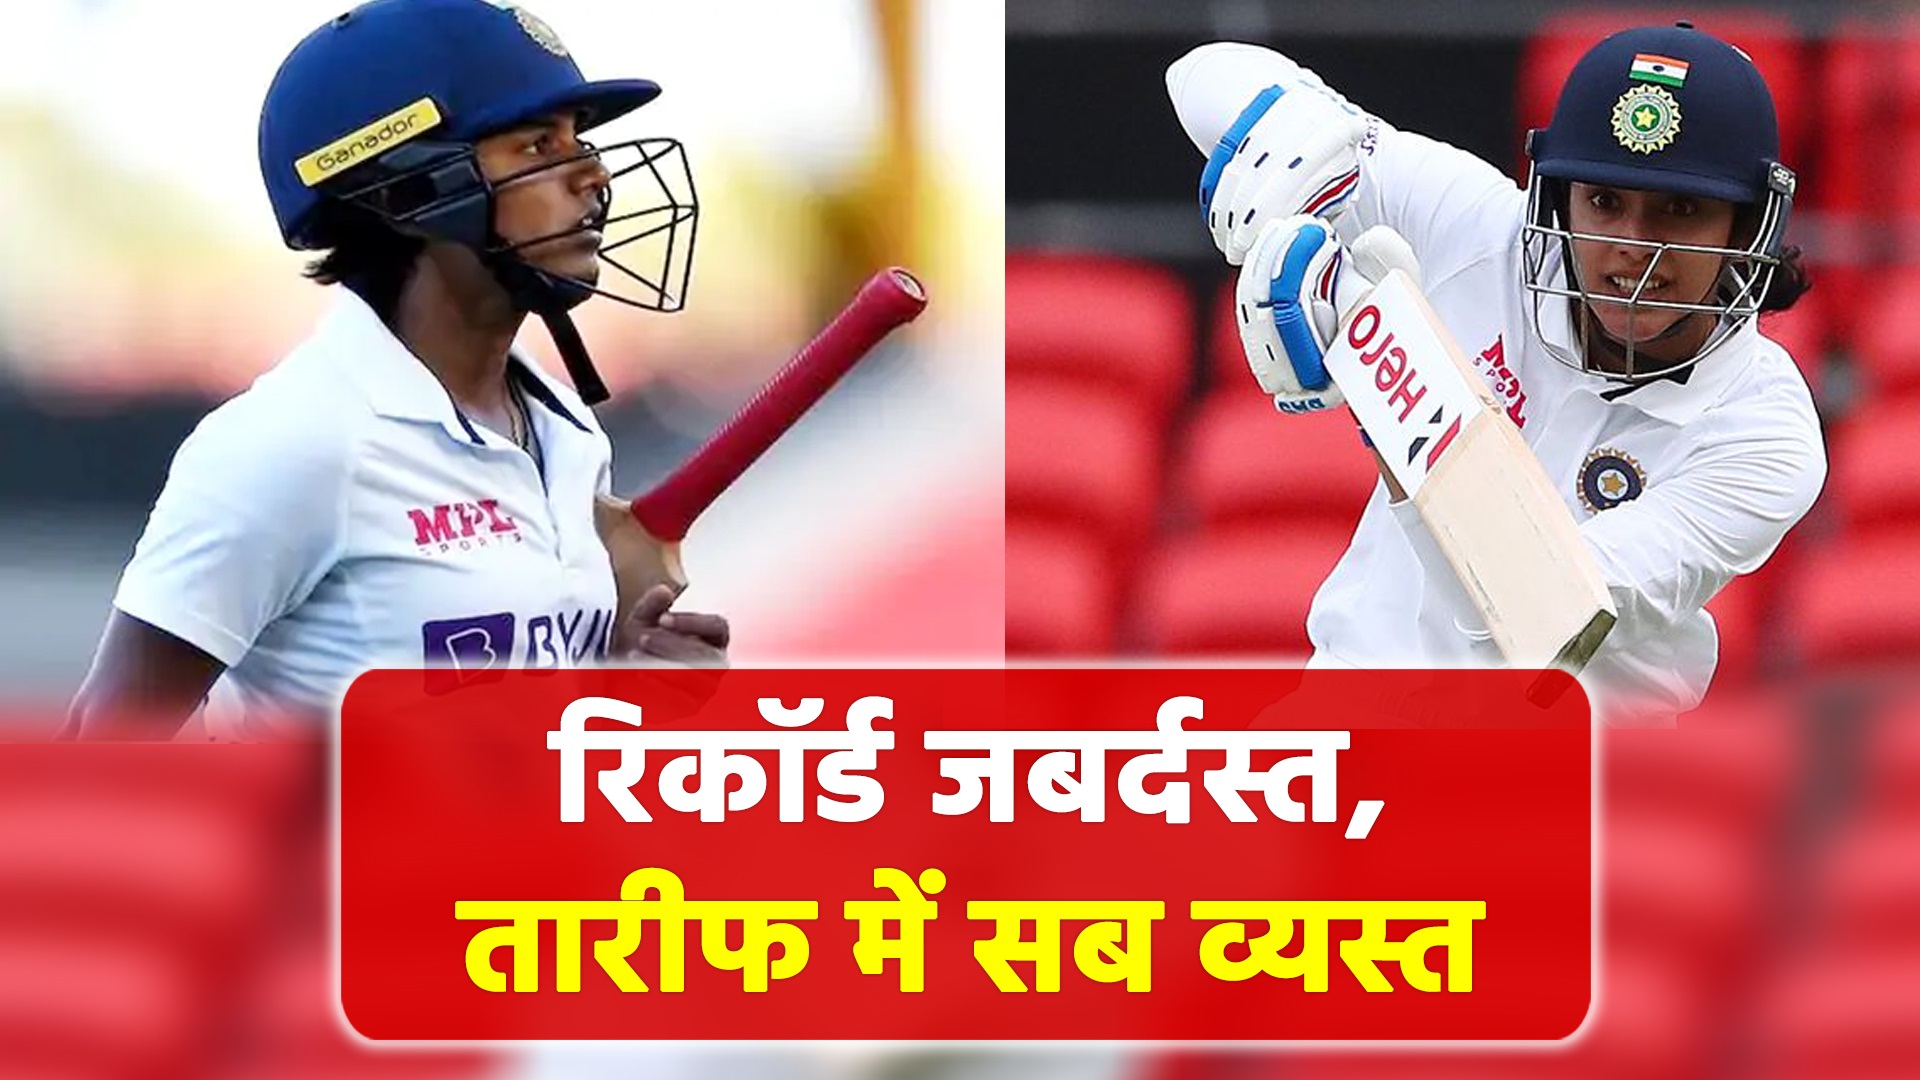 India vs australia: Smriti Mandhana equals Virat Kohli and Poonam Raut